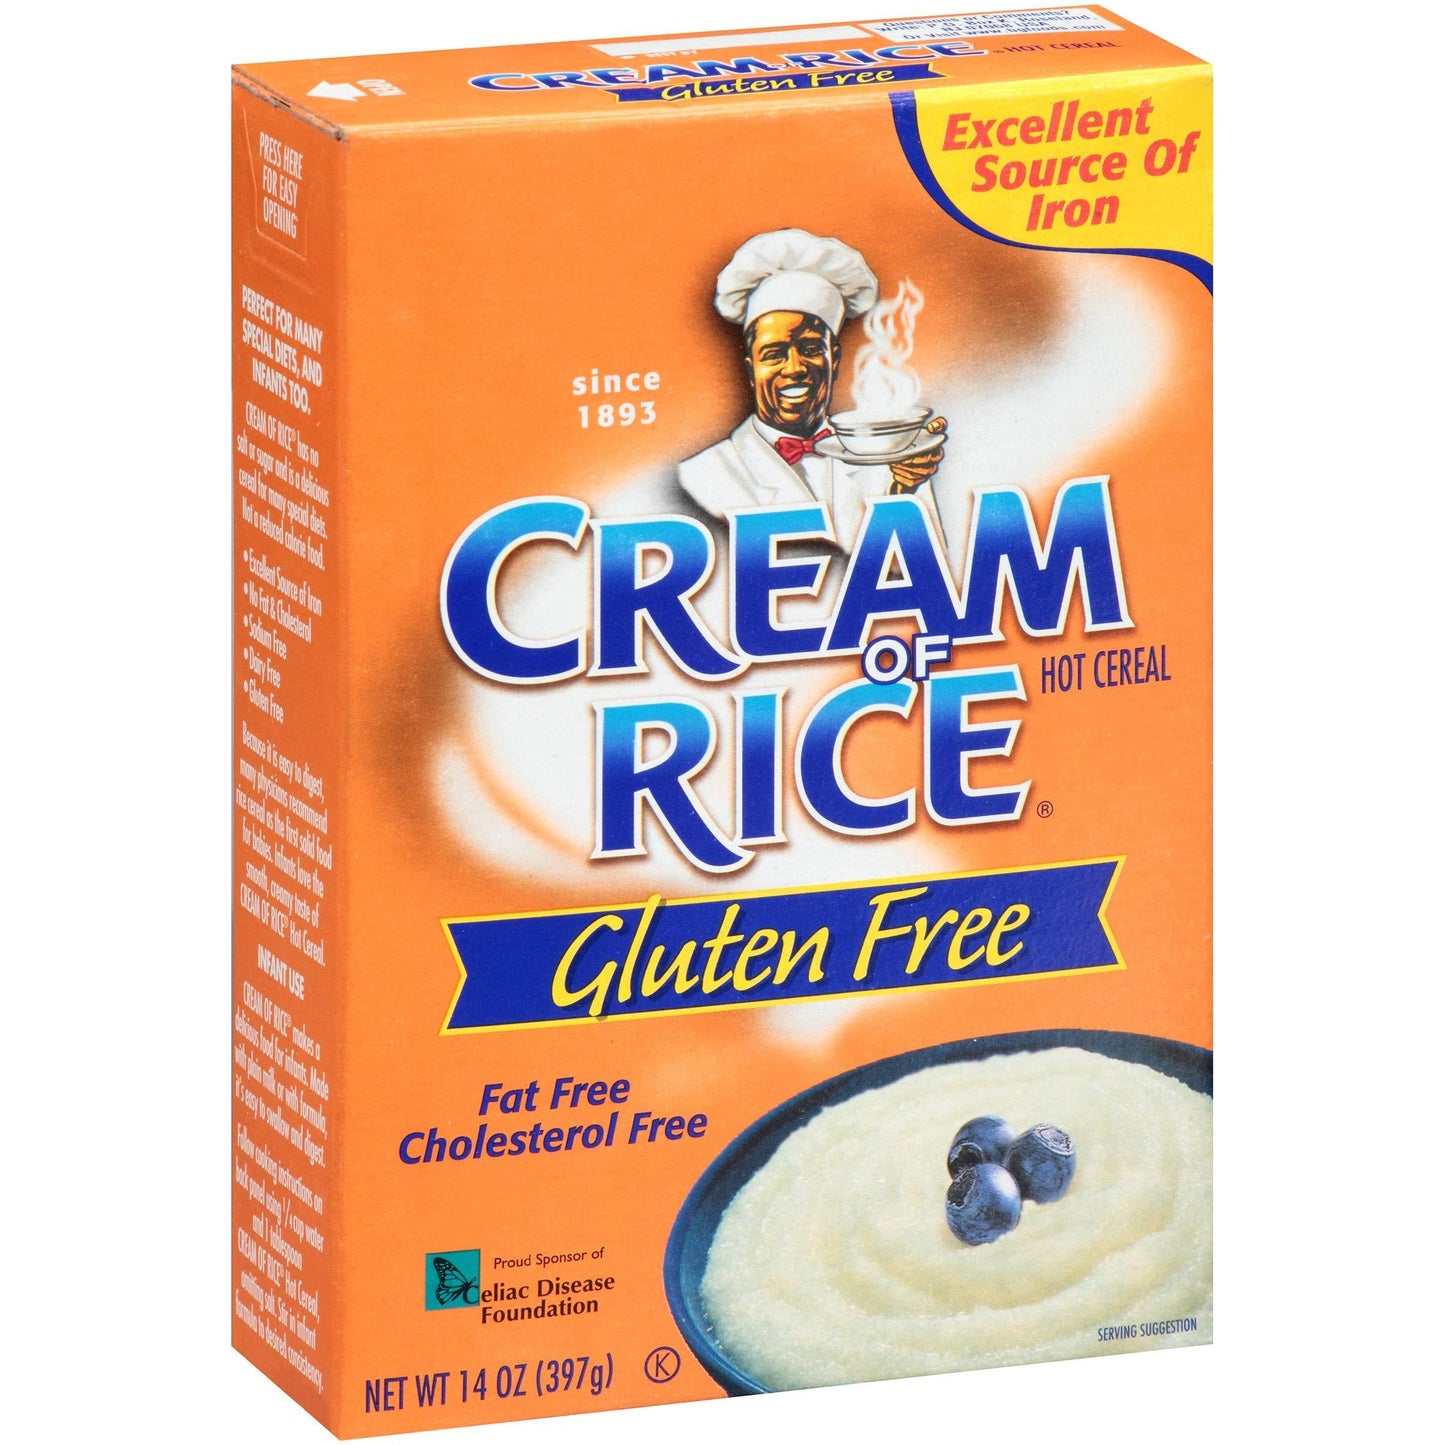 Cream of Rice Gluten Free Hot Ceral 395g Box of 12